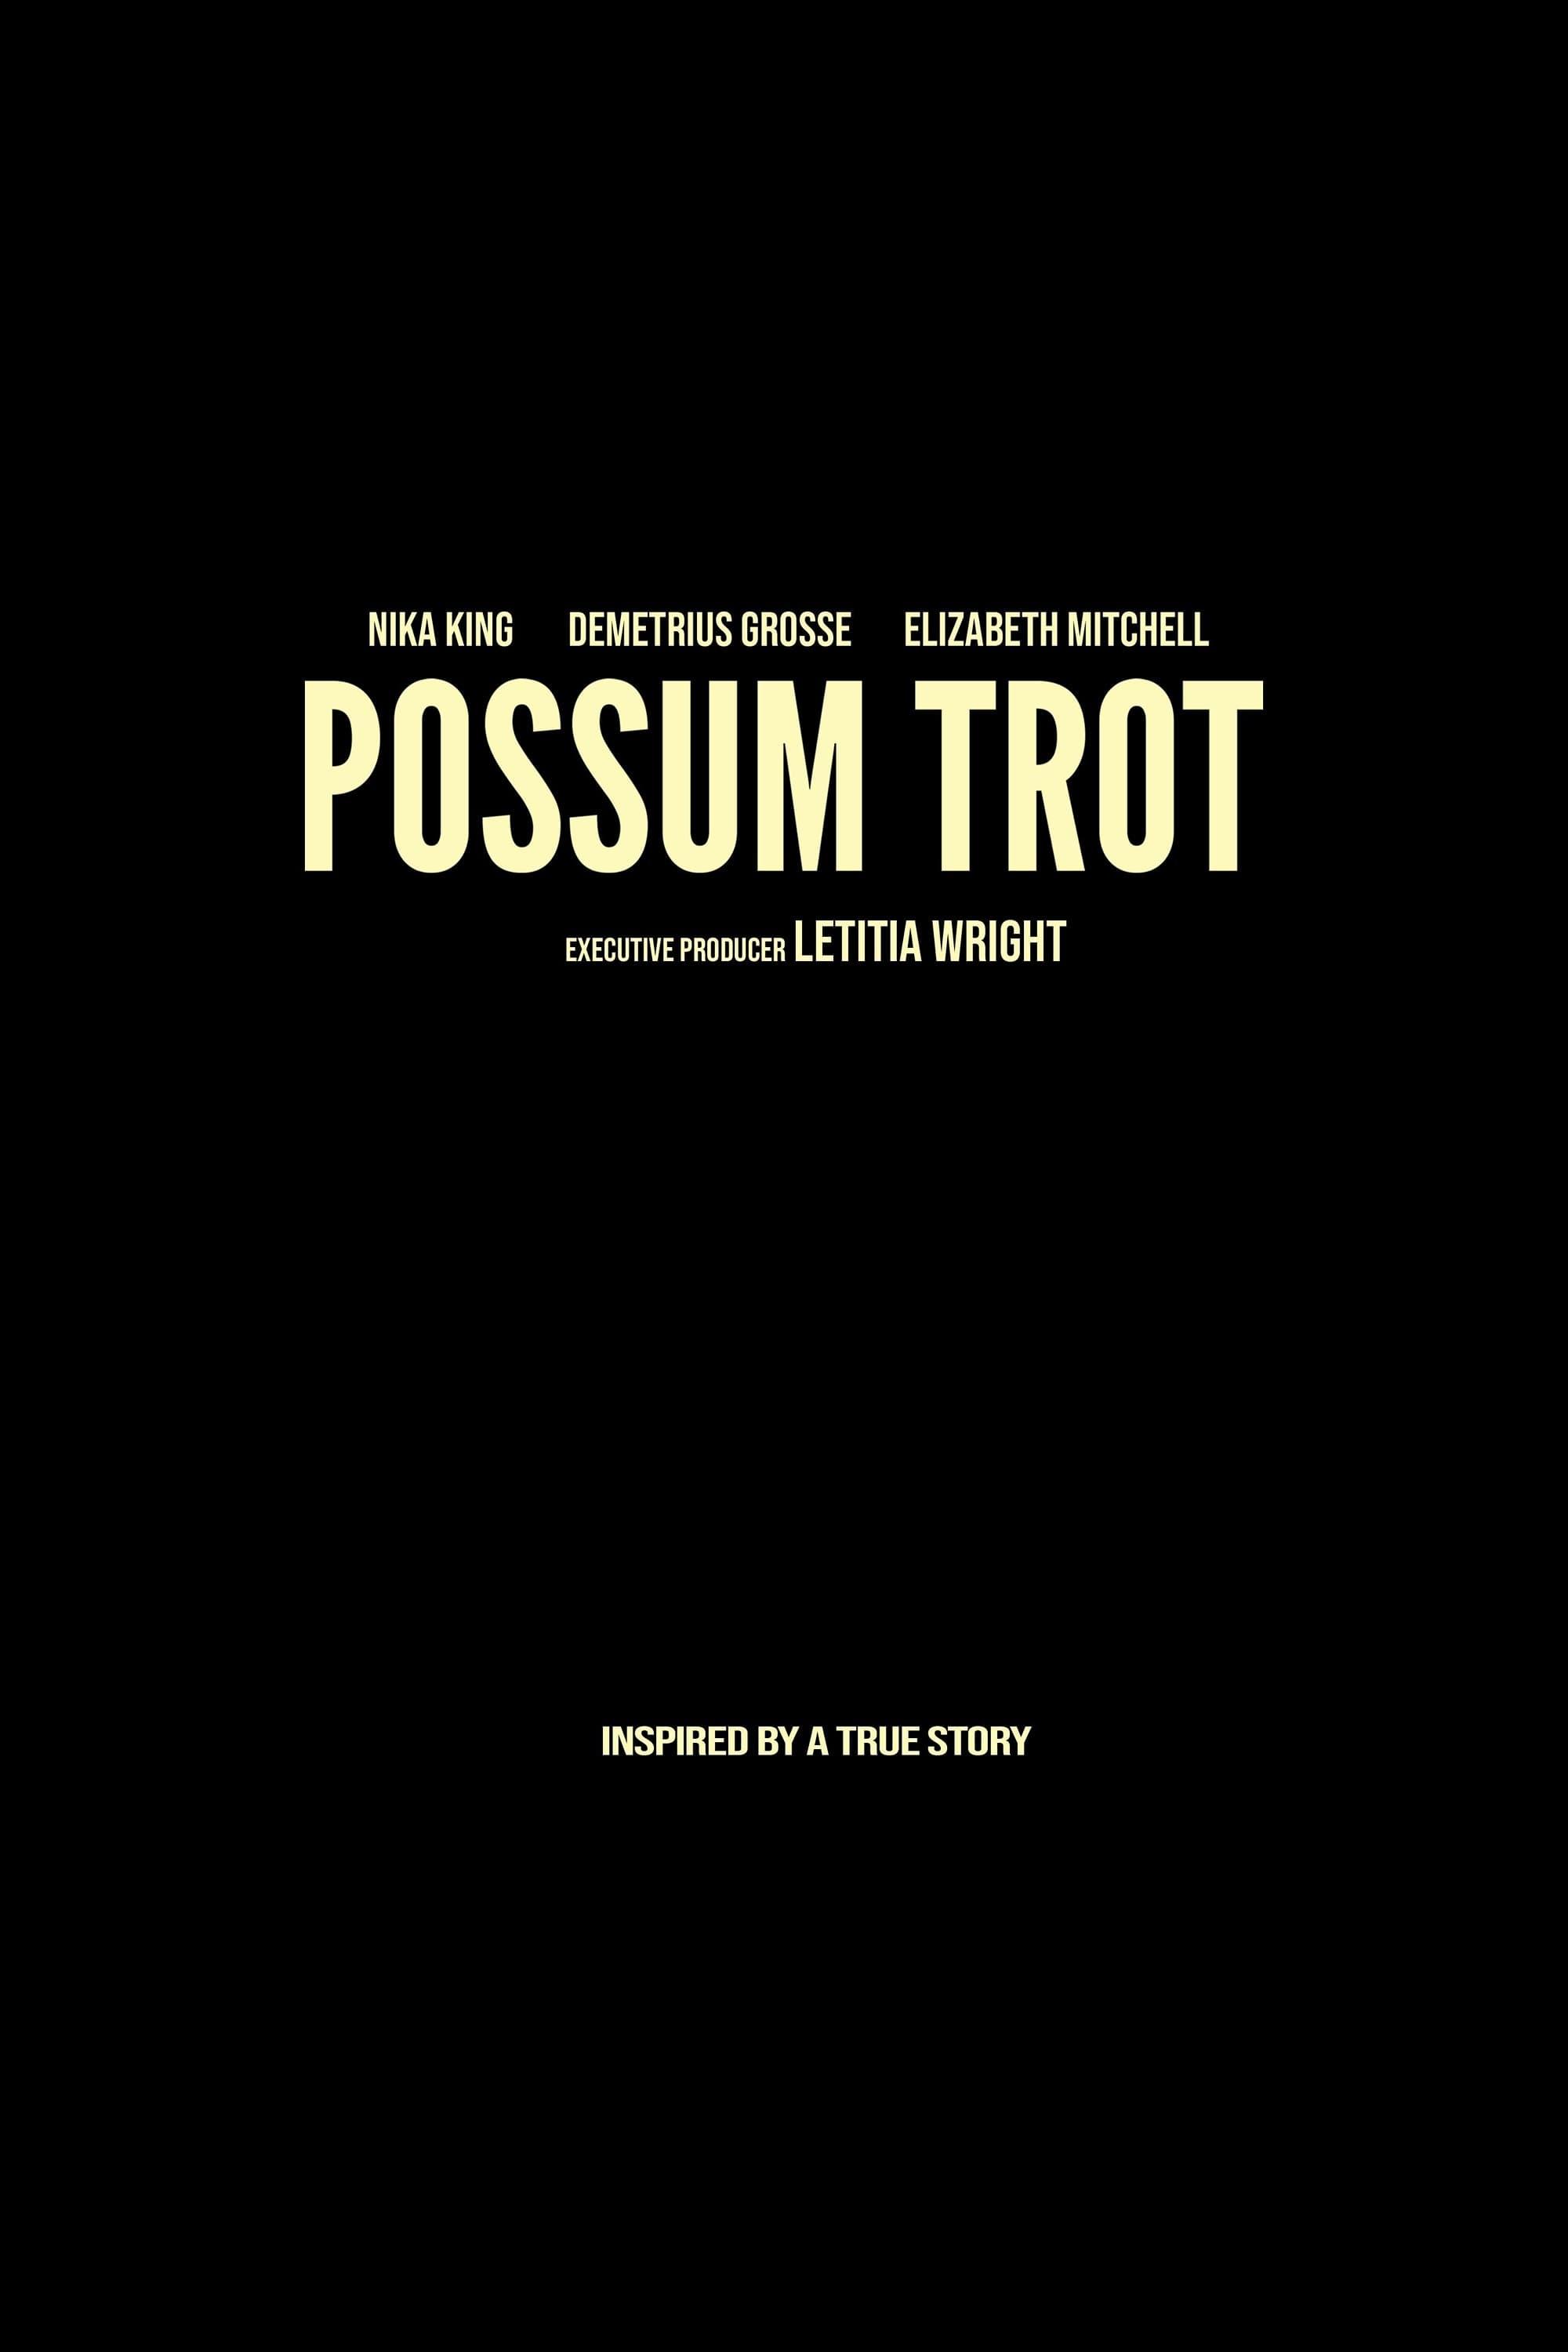 Possum Trot poster